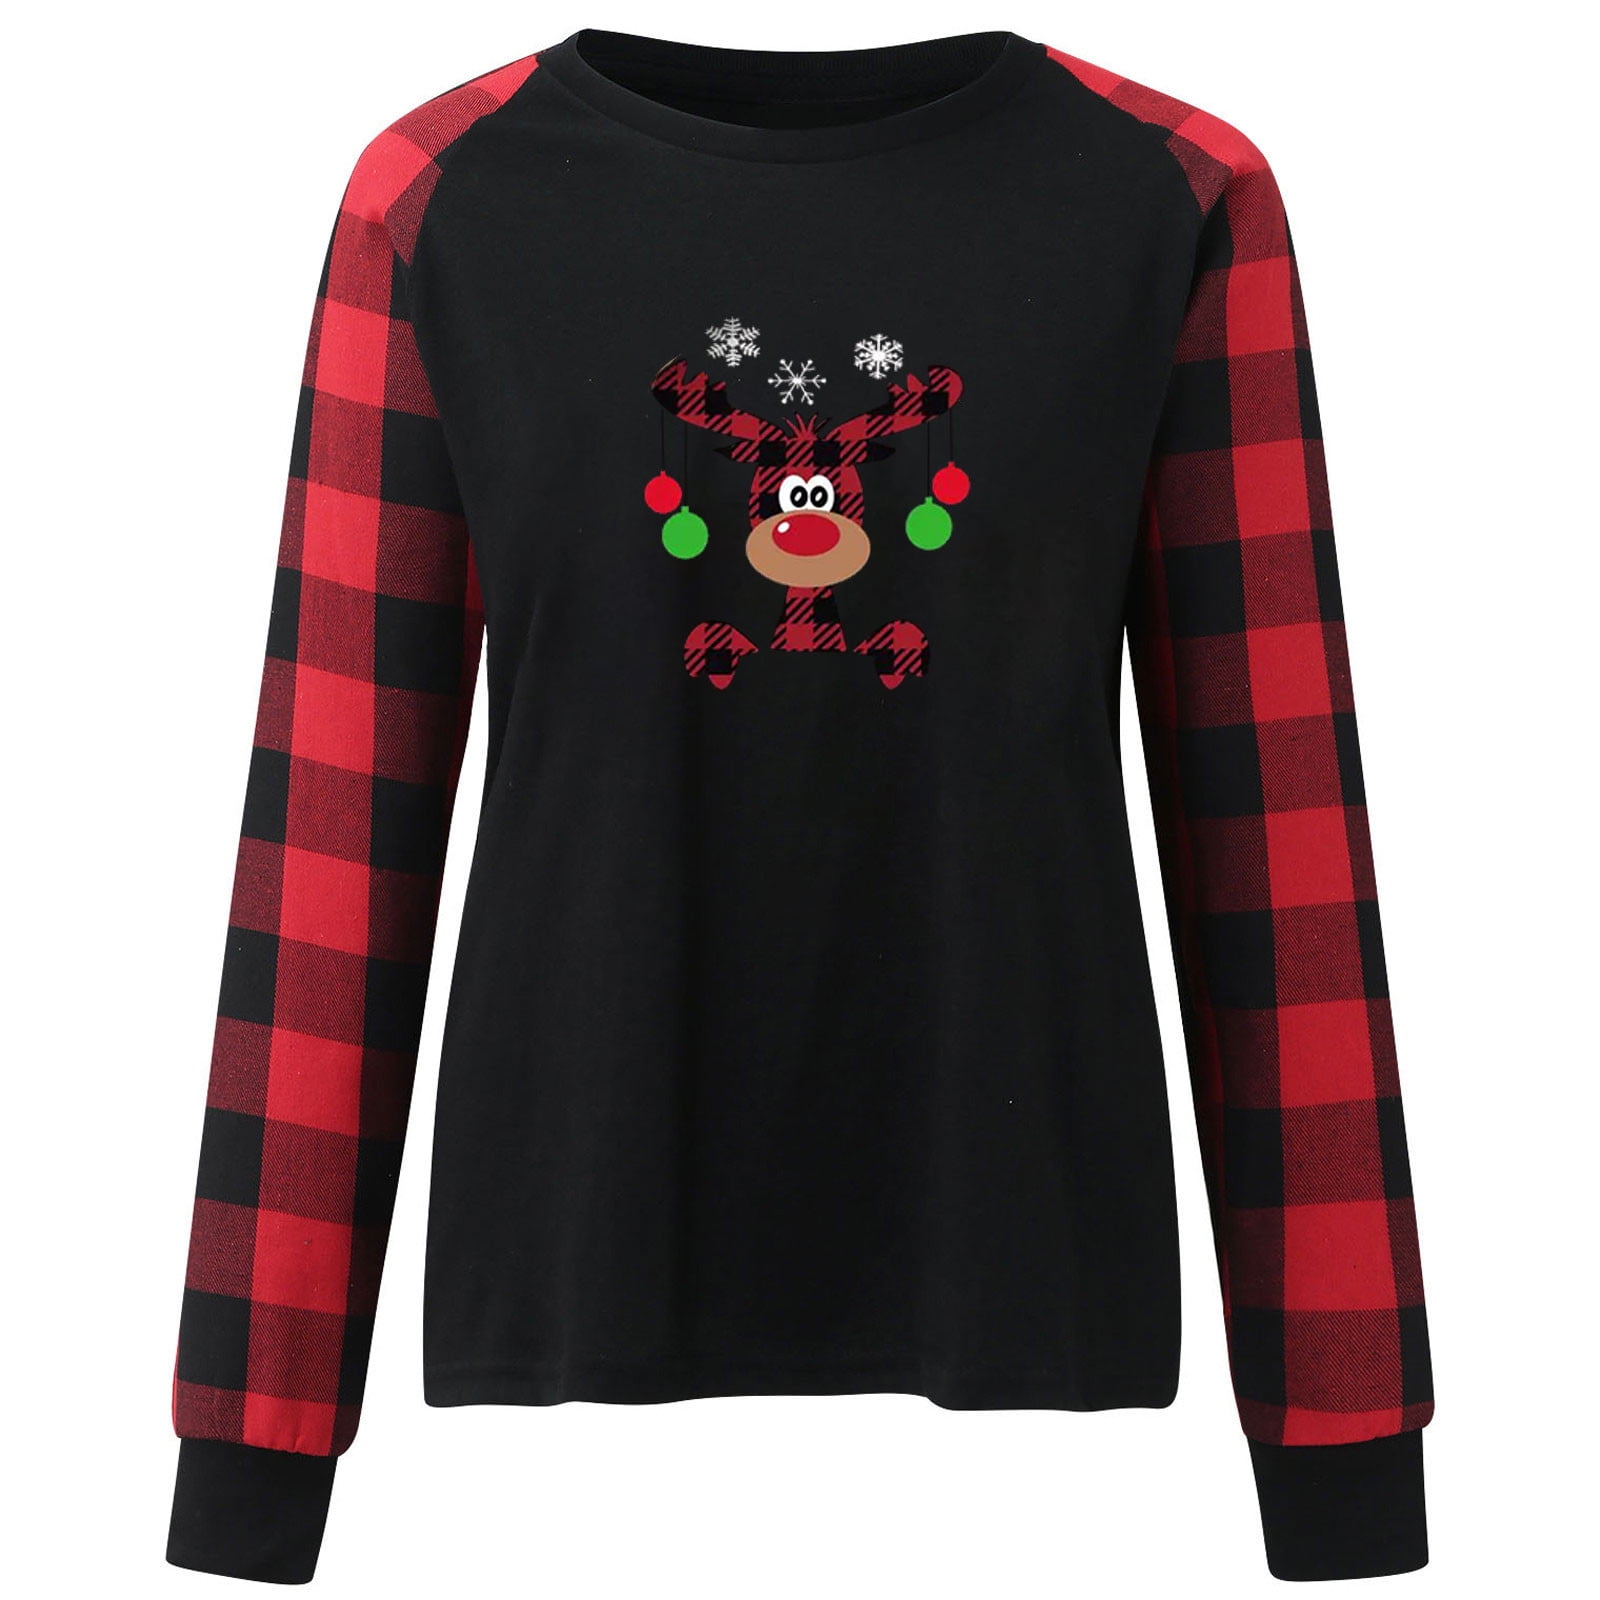  Things For 1 Dollar, Christmas Sweatshirt Women Buffalo Plaid  Gnome Print Xmas Pullover Casual Long Sleeve Tunic Tops Crewneck Blouses  Crewneck Sweatshirts : Sports & Outdoors